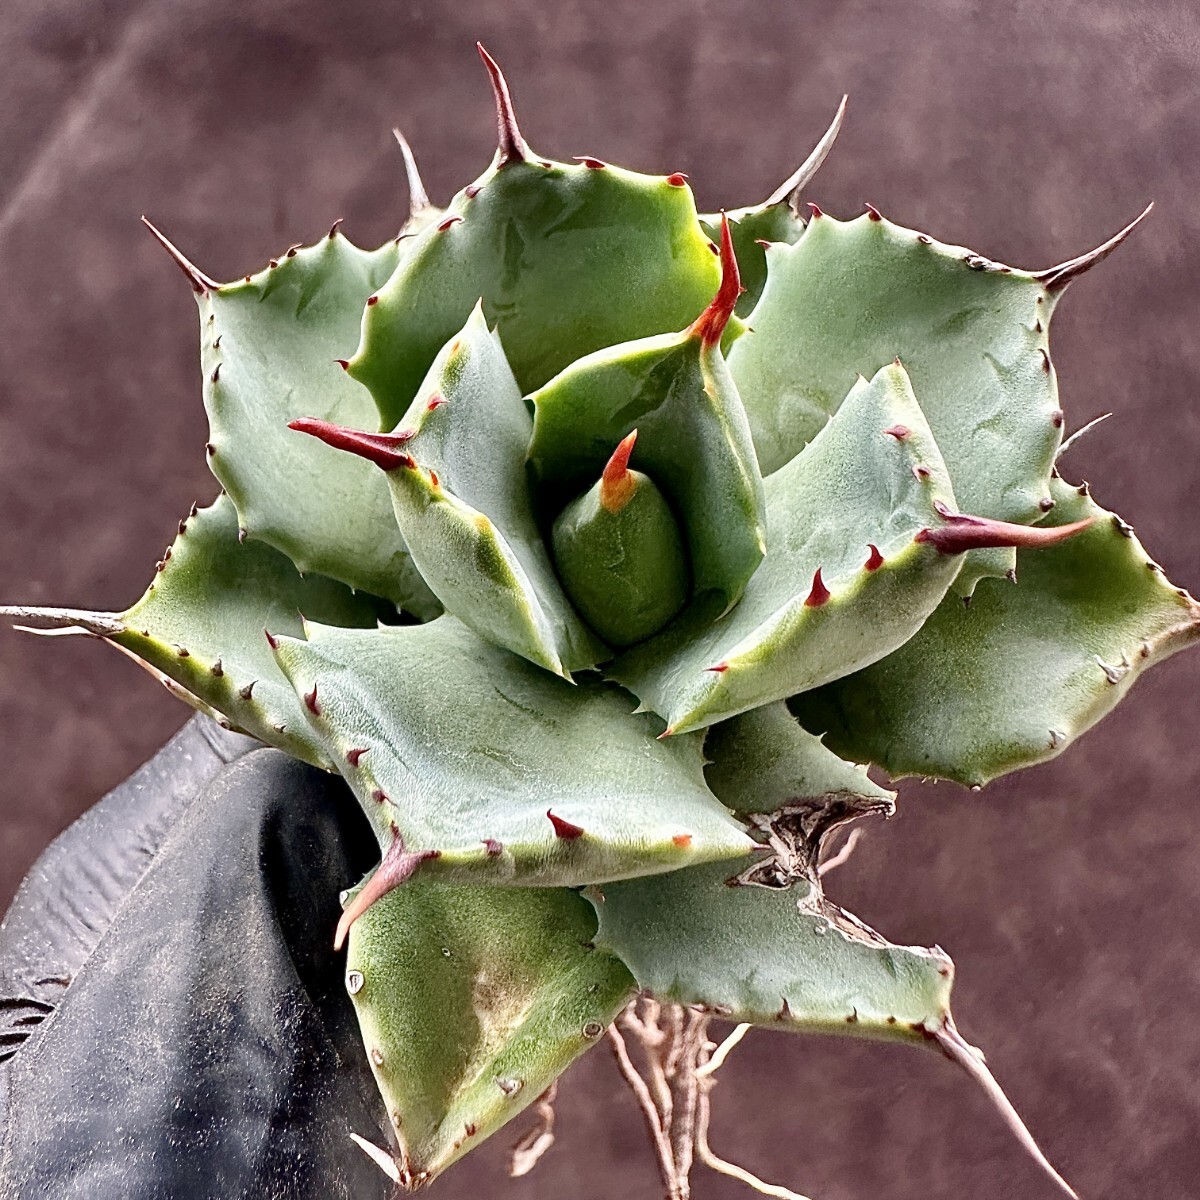  【Lj_plants】W355 アガベ チタノタ 雷帝甲蟹厚葉 丸い叶 コンパクト包葉形 極上美株の画像3